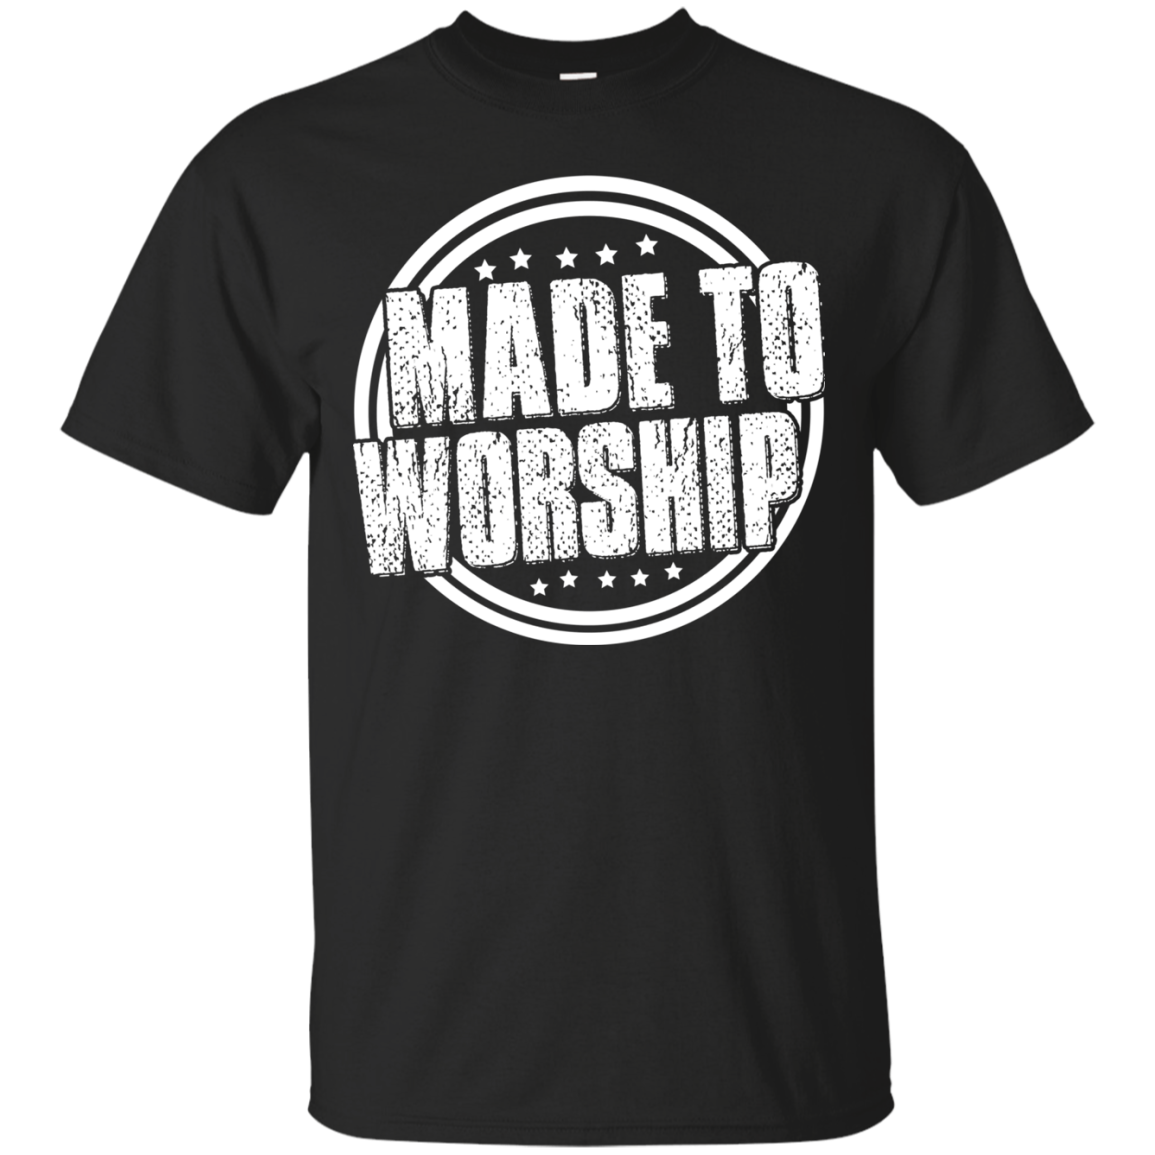 Made to worship shirt, hoodie, tank - Allbluetees - Online T-Shirt ...